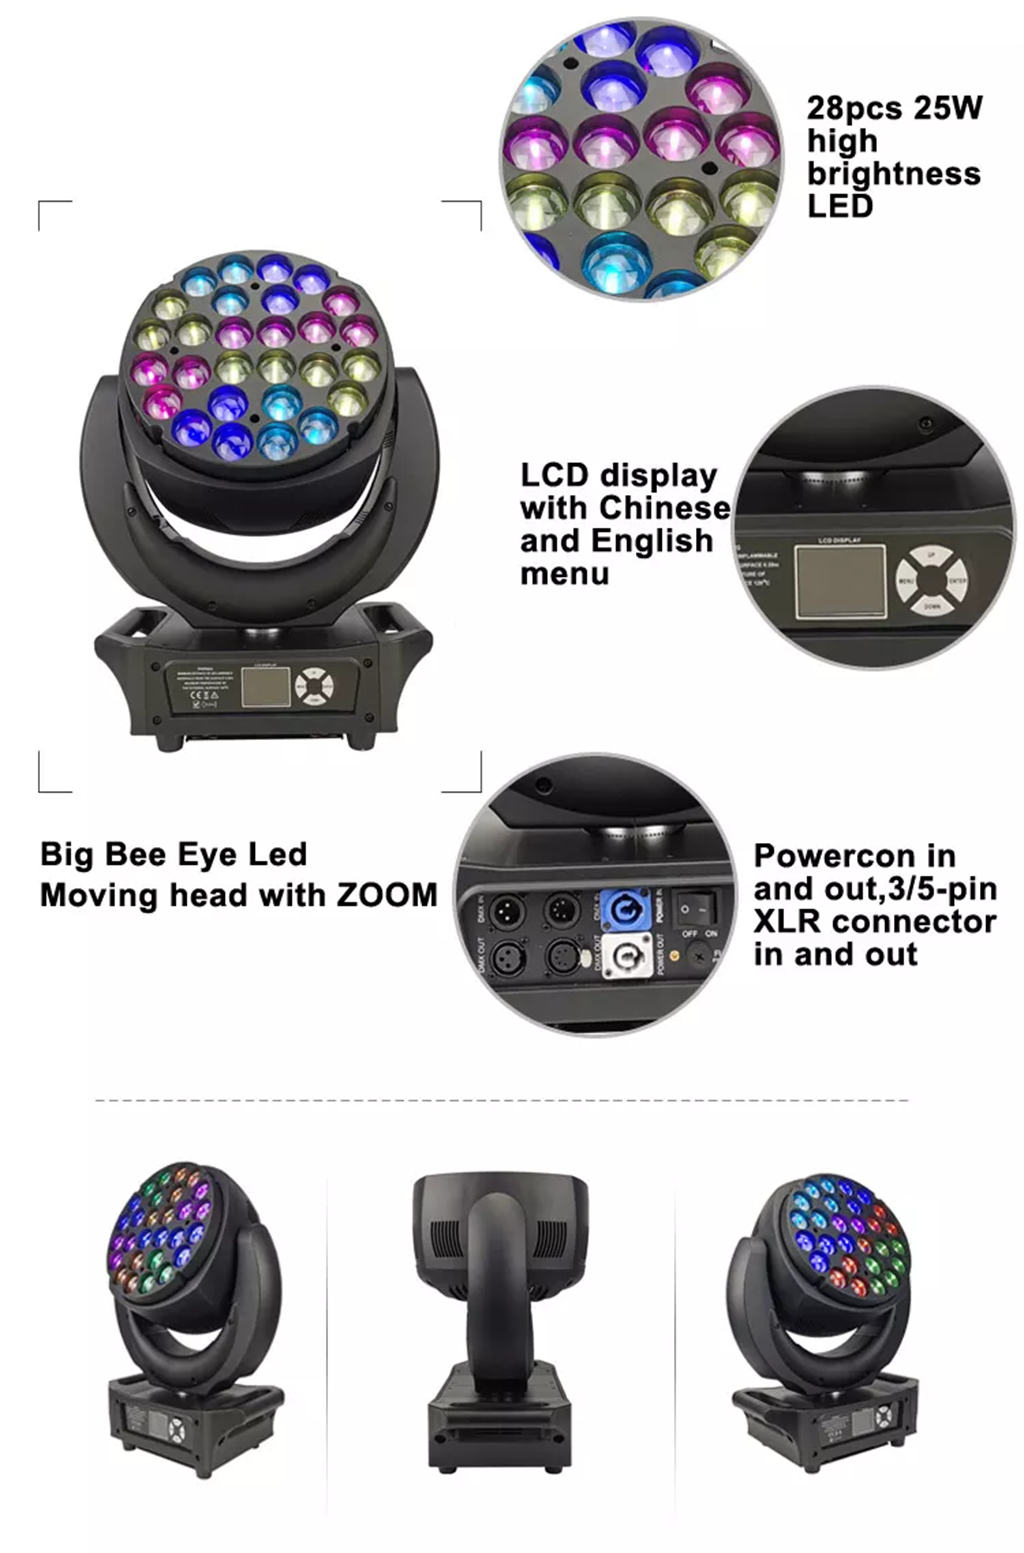 28x25W High Brightness LED ZOOM Moving Head Light HS-LMW2825 - Led moving head - 1